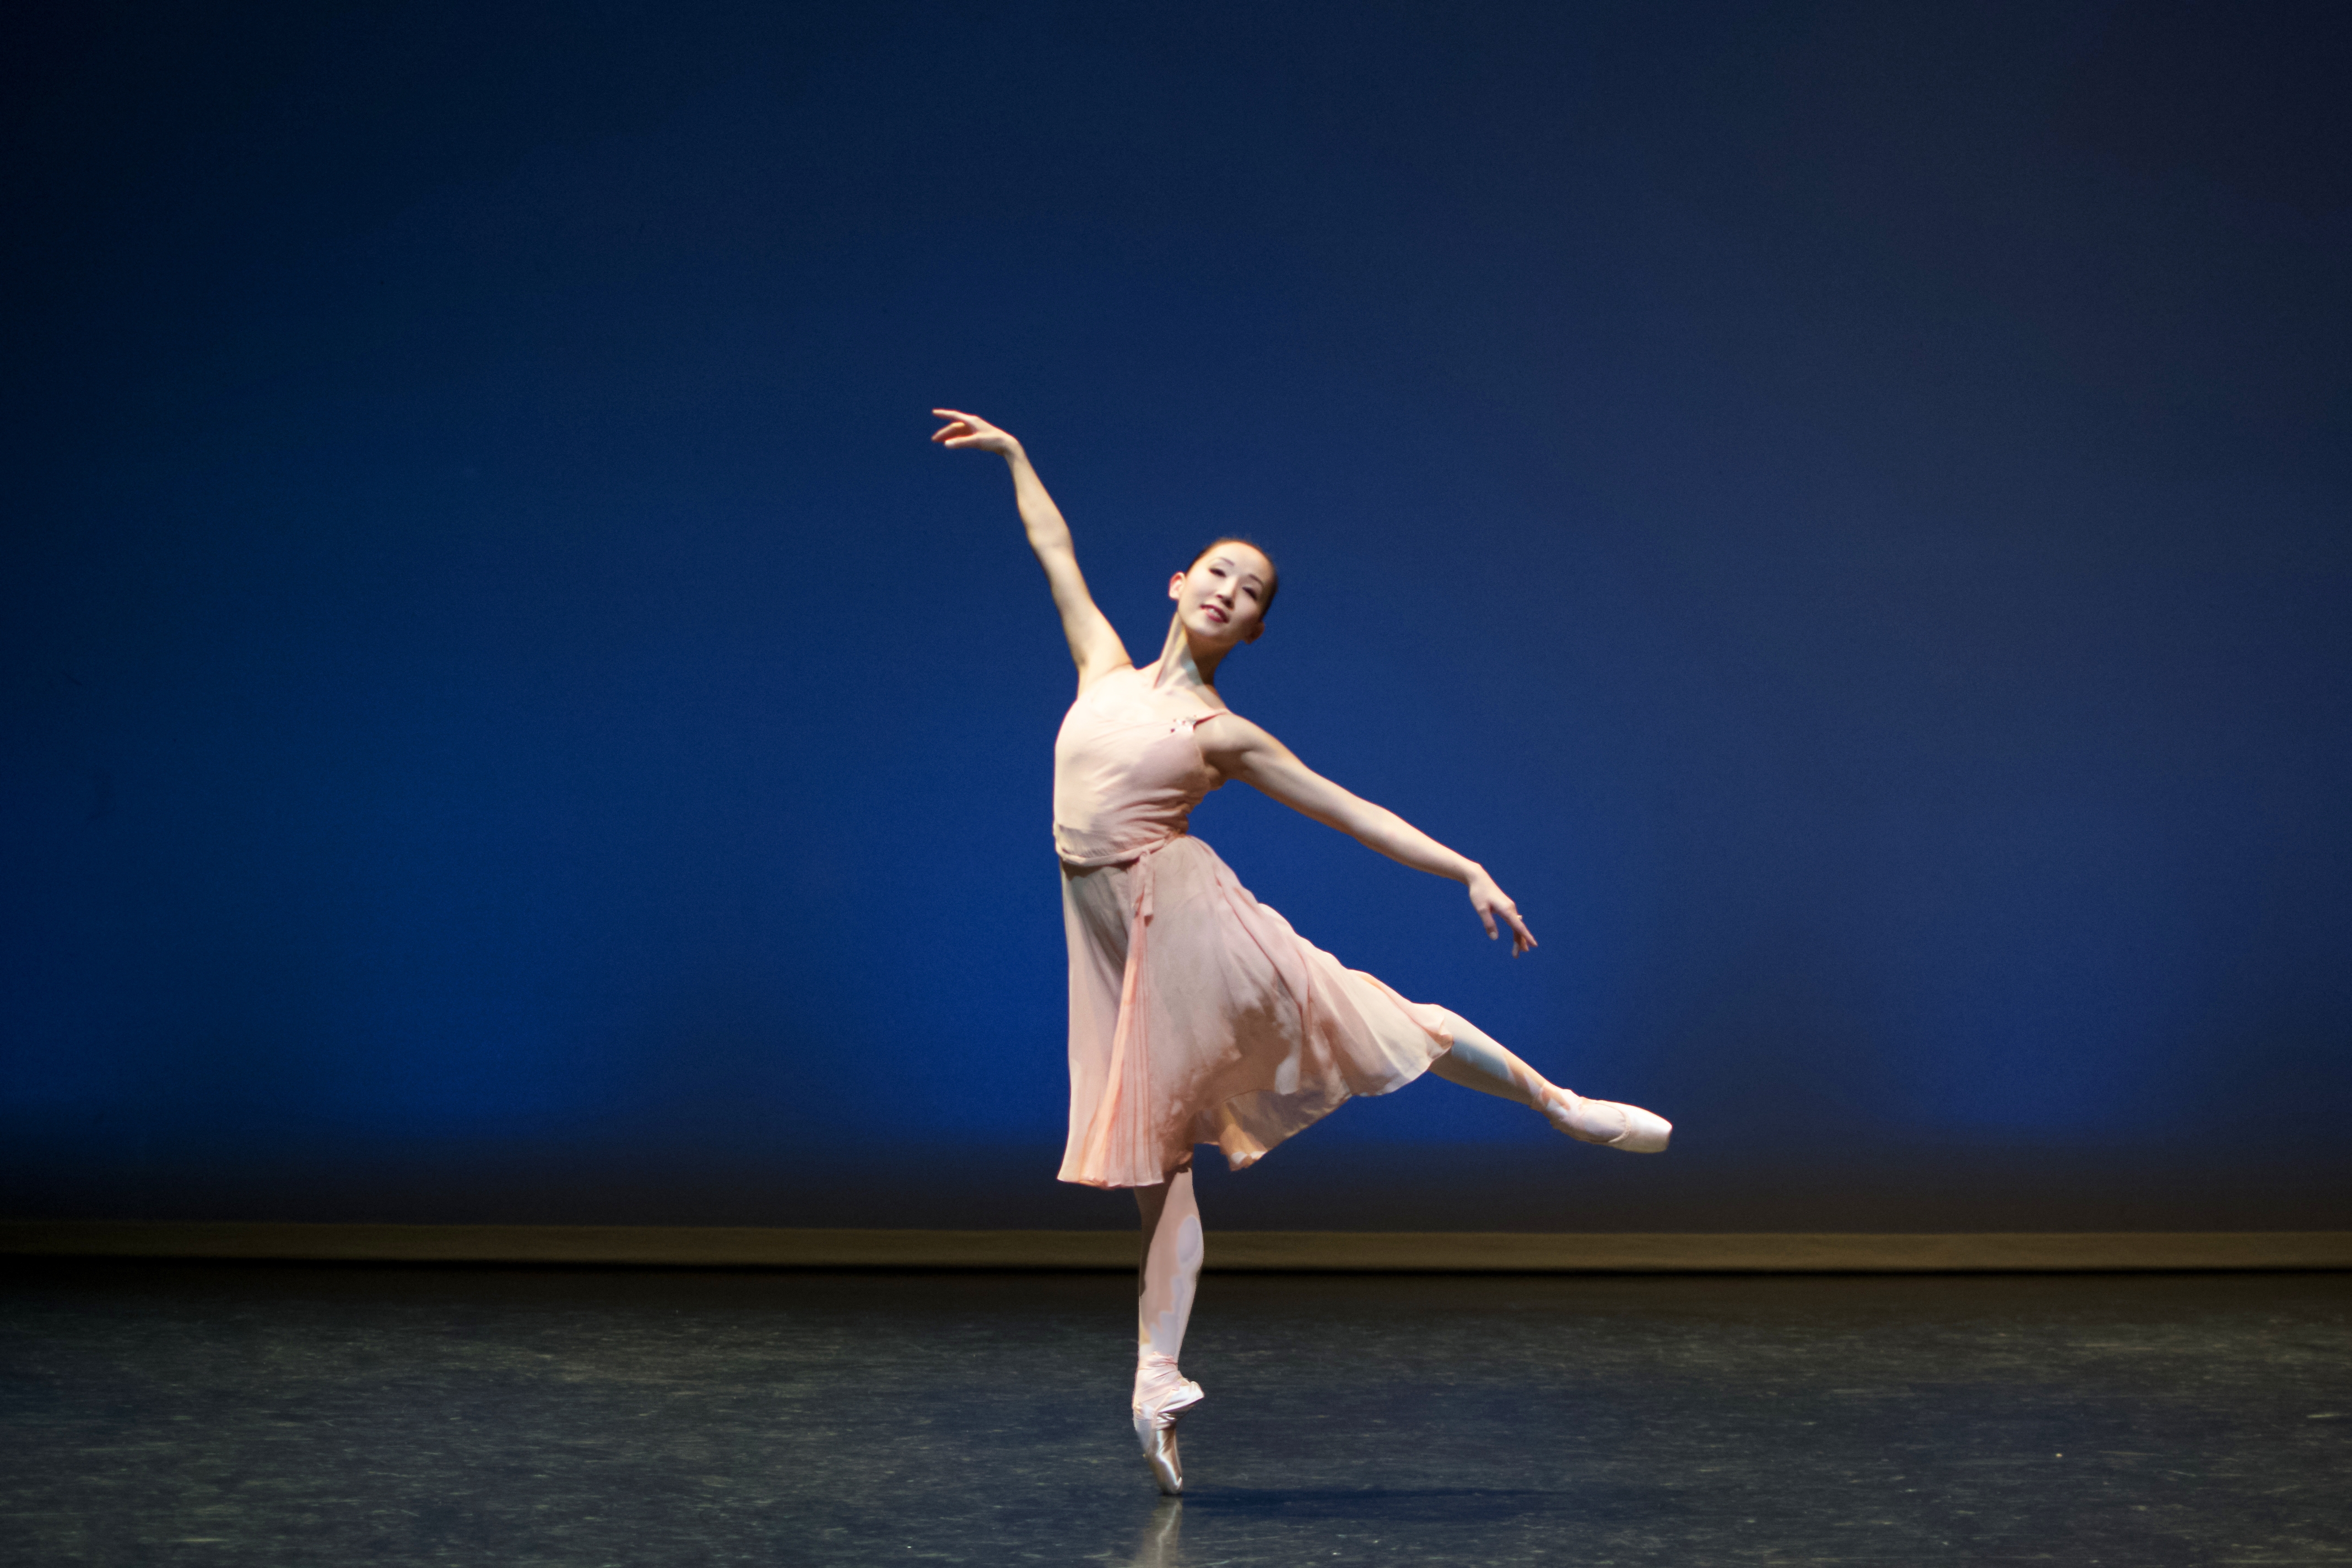 Untamed, Unbound: Grand Rapids Ballet premieres 'Wild Sweet Love' this fall